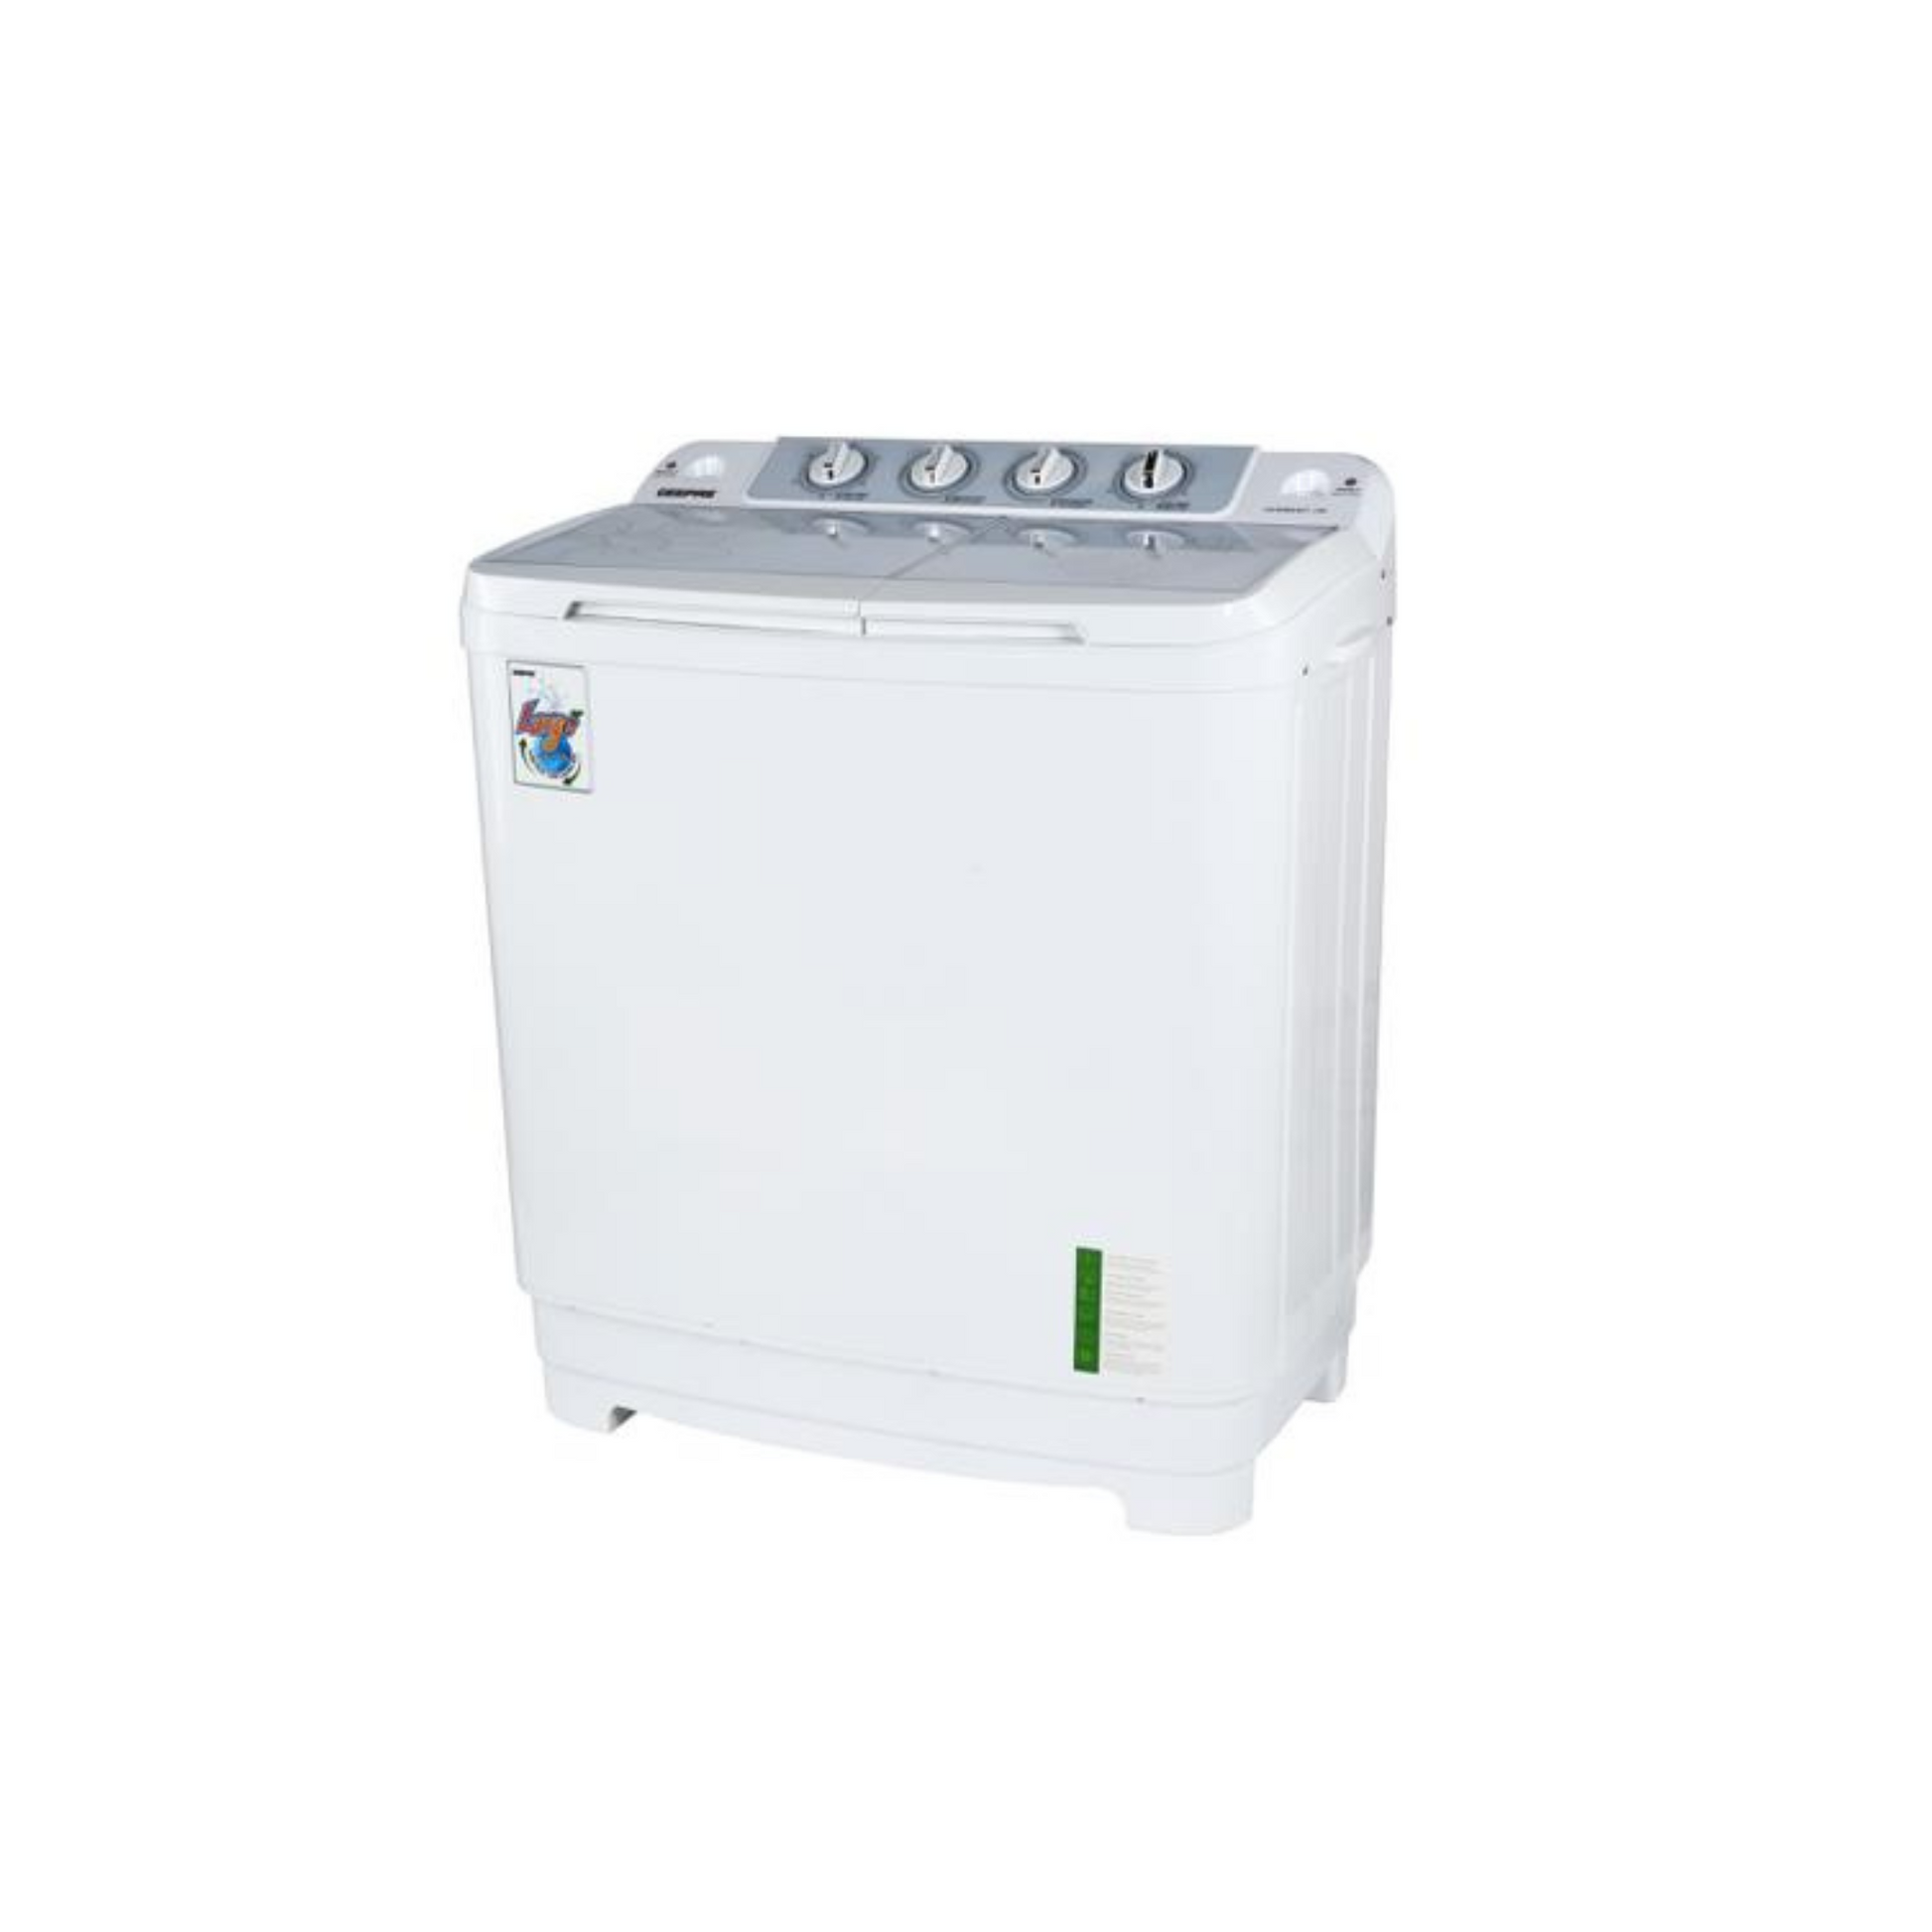 Geepas 10KG Semi Automatic Twin Hub Washer, GSWM6467-10K